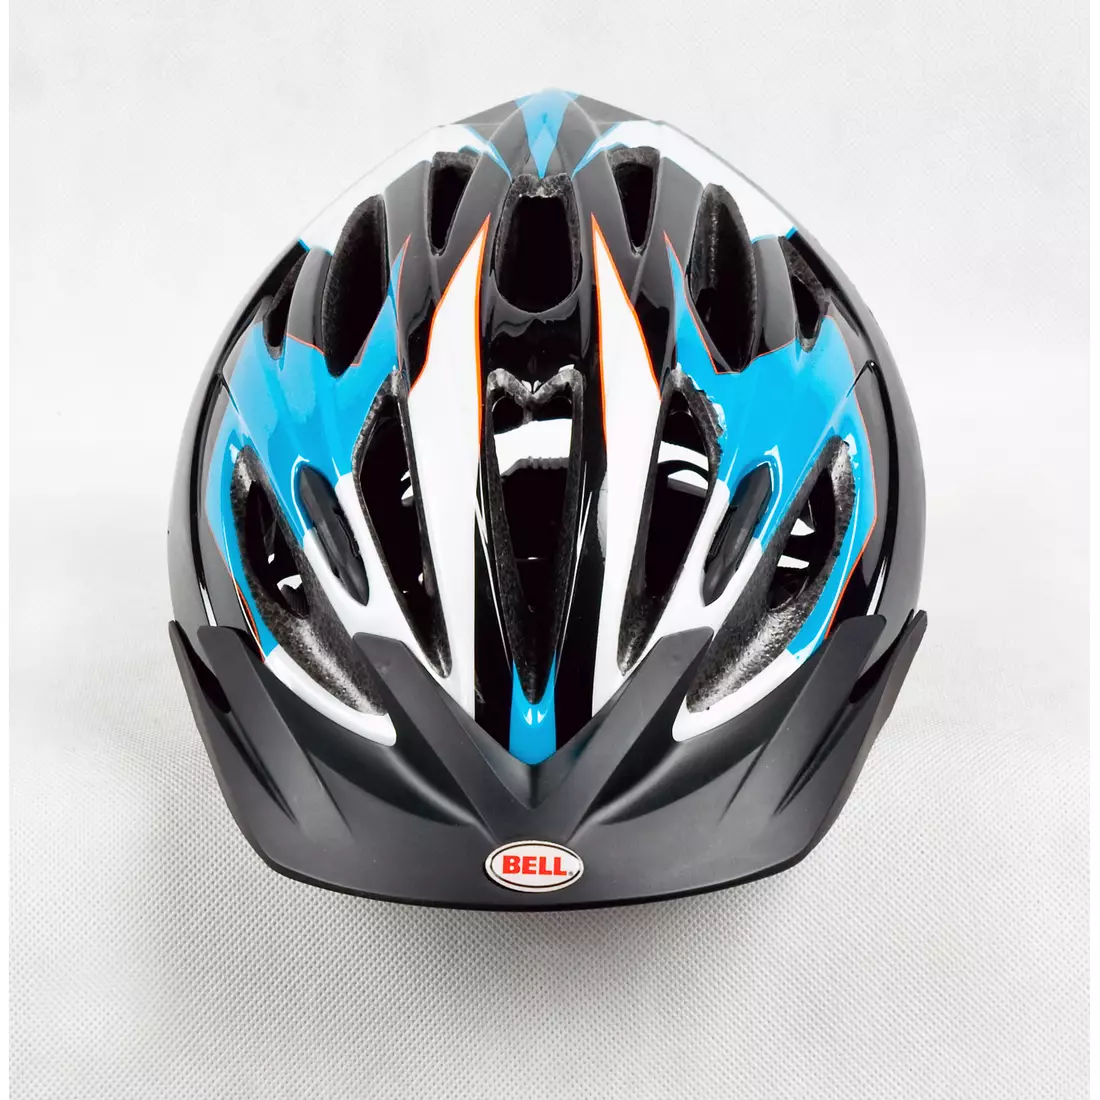 BELL PRESIDIO - bicycle helmet, black and blue